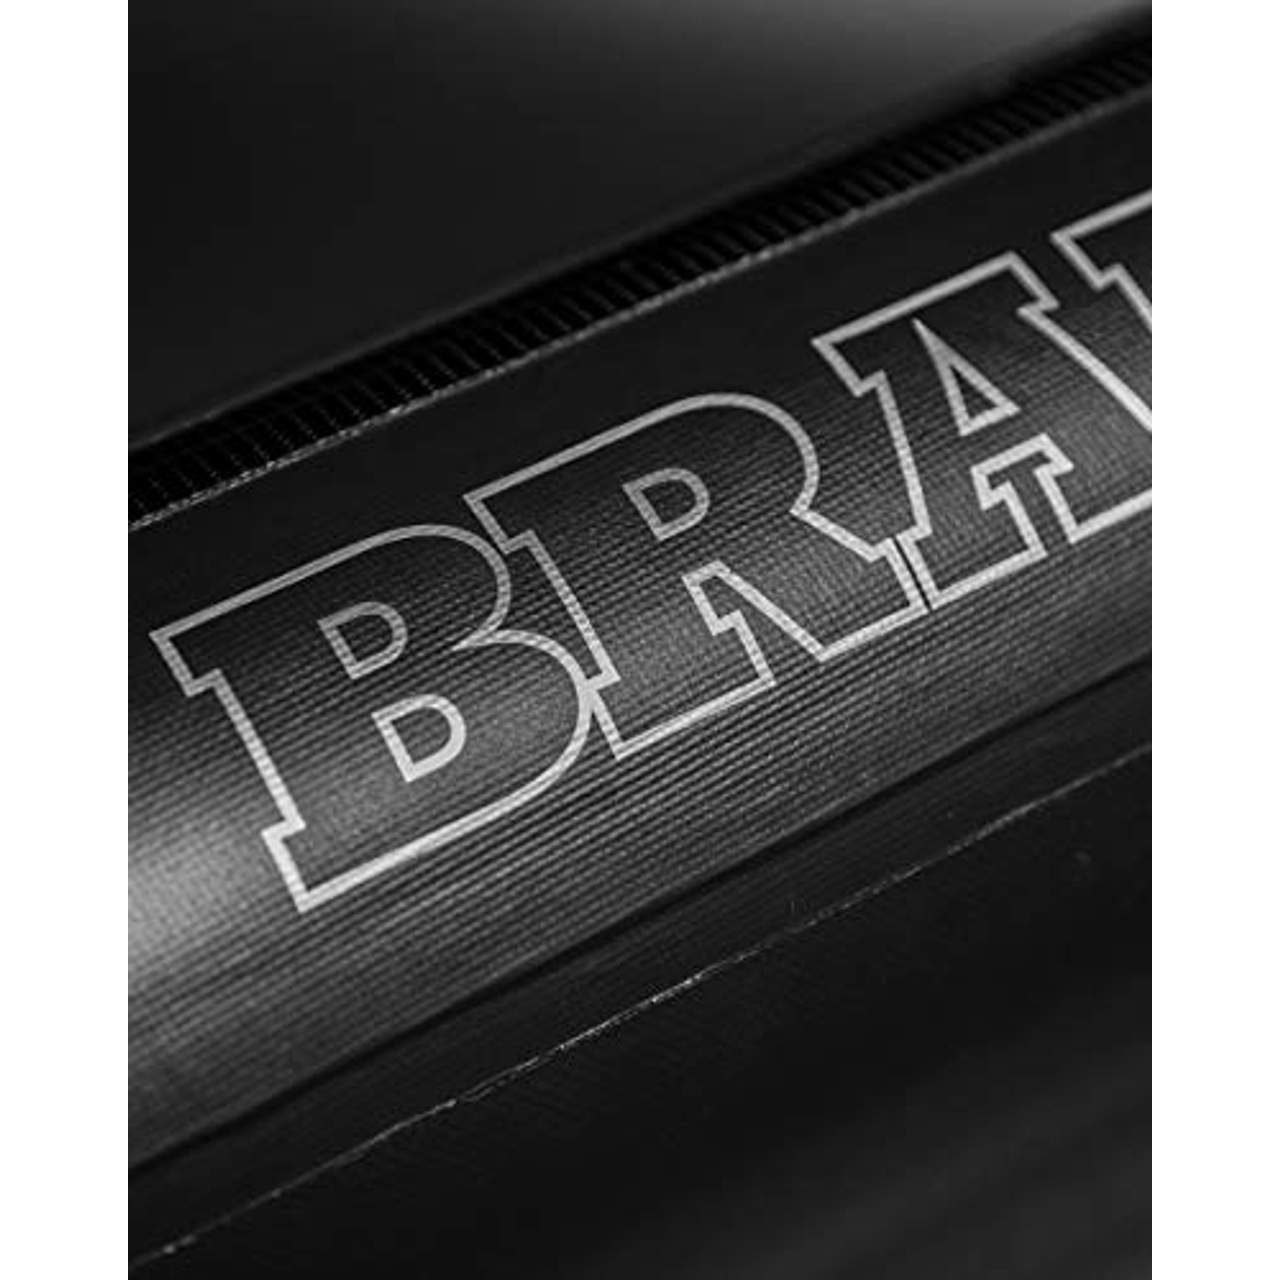 Jobe Brabus X Shadow 10.6 Aufblasbares SUP Board Set Limited Edition